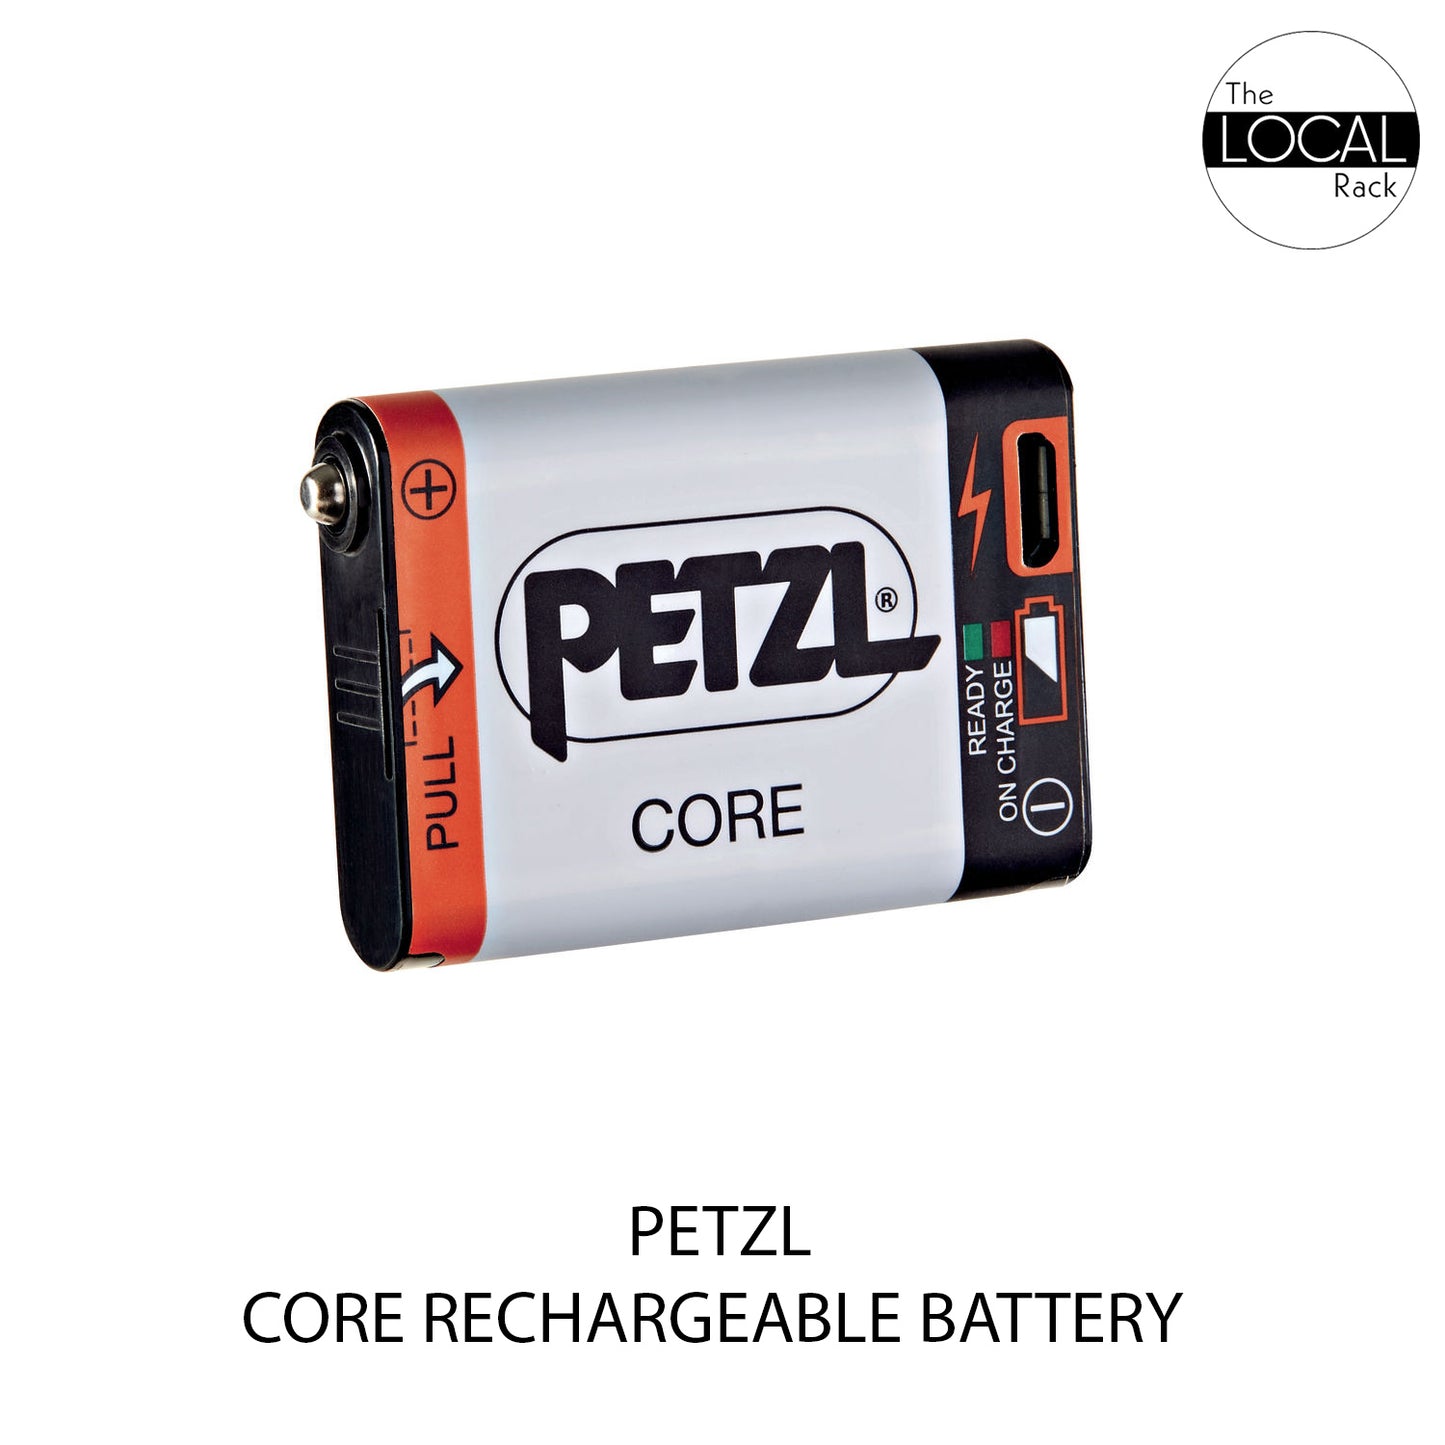 [BUNDLE] Petzl ACTIK HeadLamp (v19), 350 lumens with CORE Rechargeable Battery